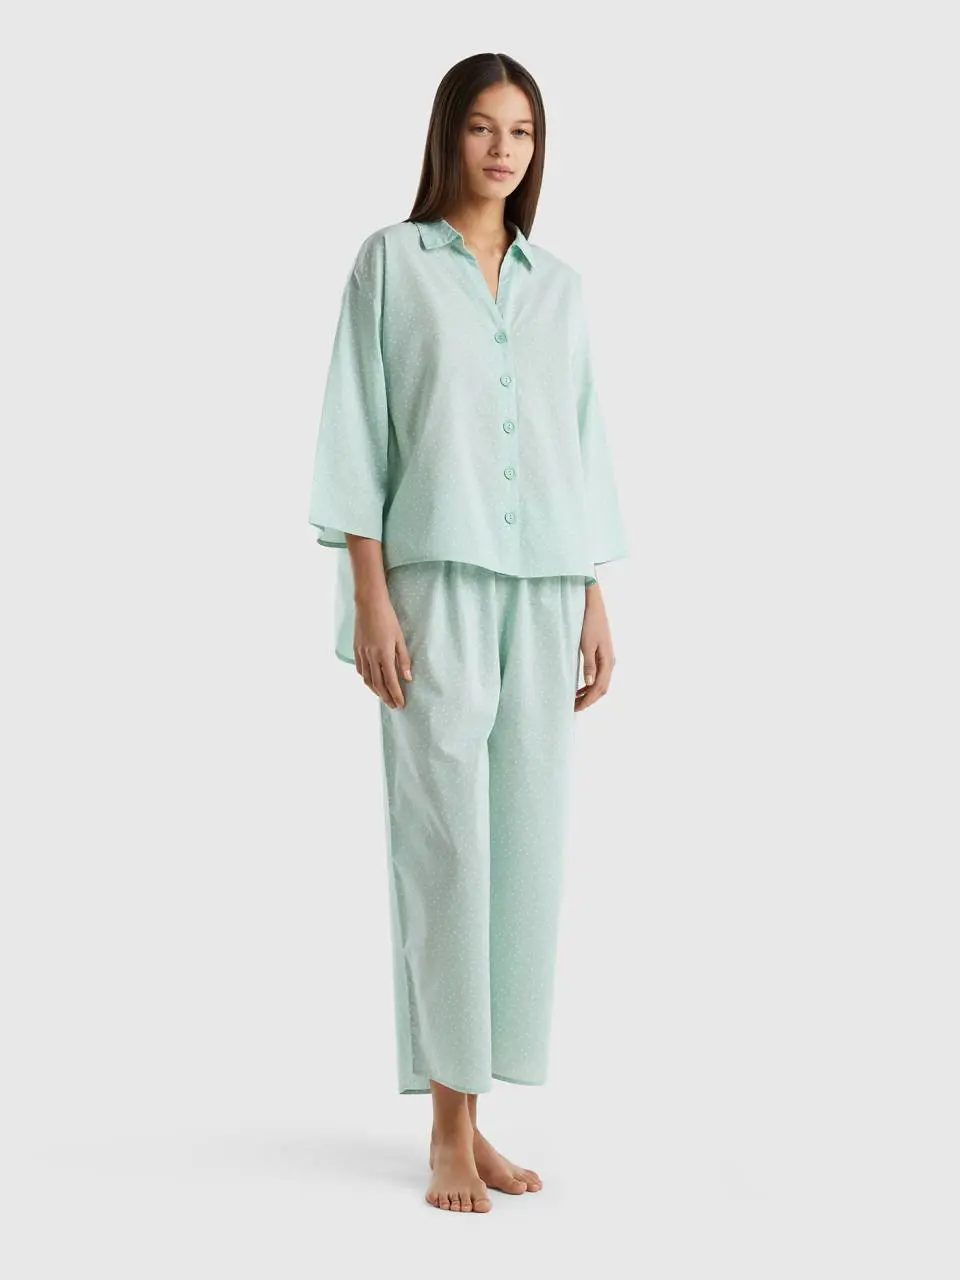 Benetton polka dot pyjamas in cotton. 1